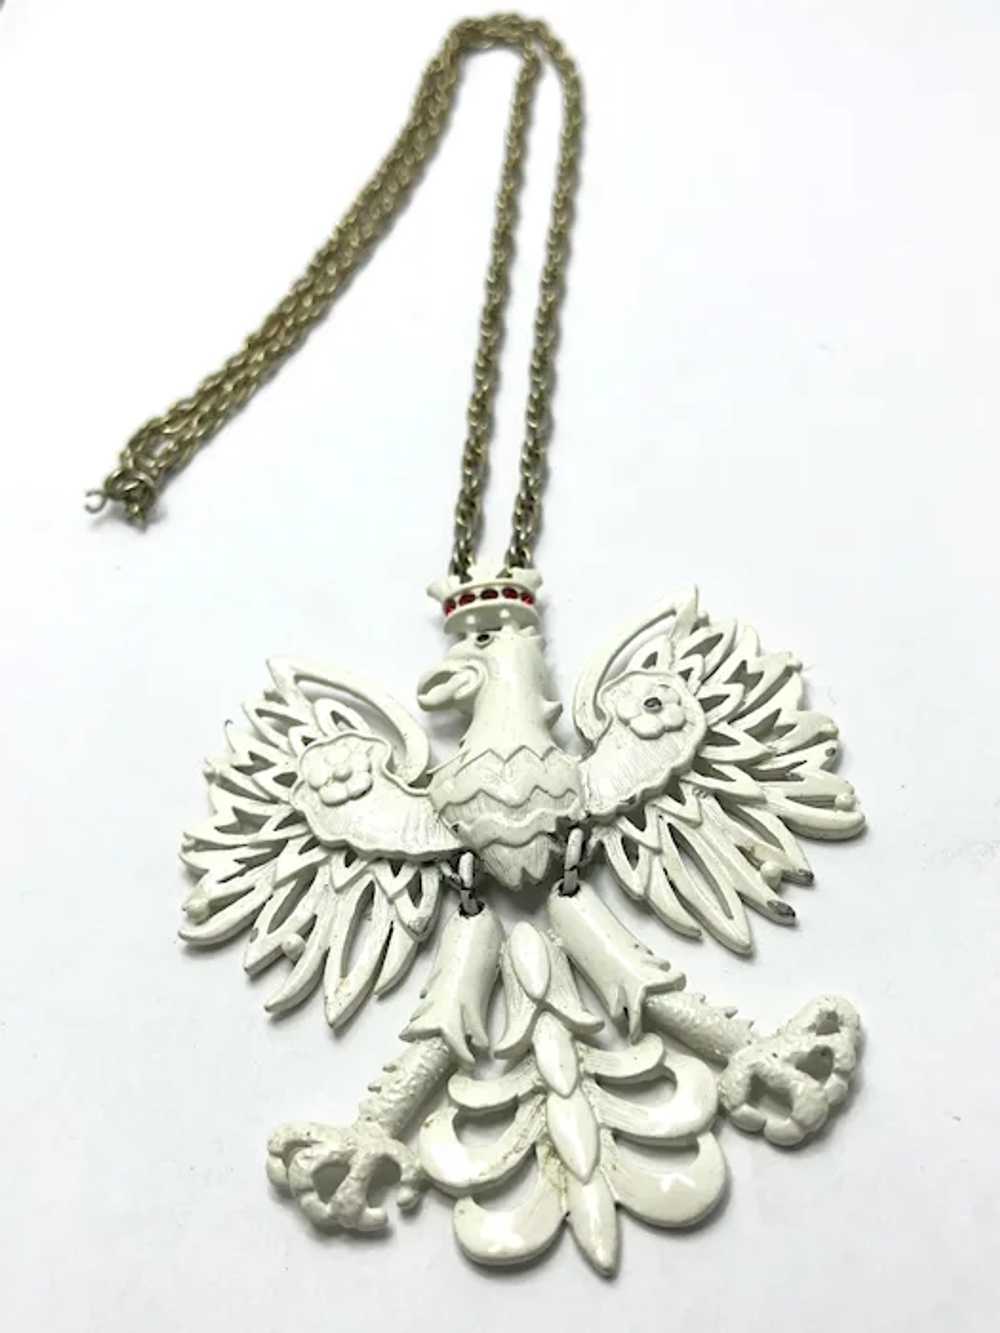 Vintage White Enamel Eagle Pendant Necklace - image 3